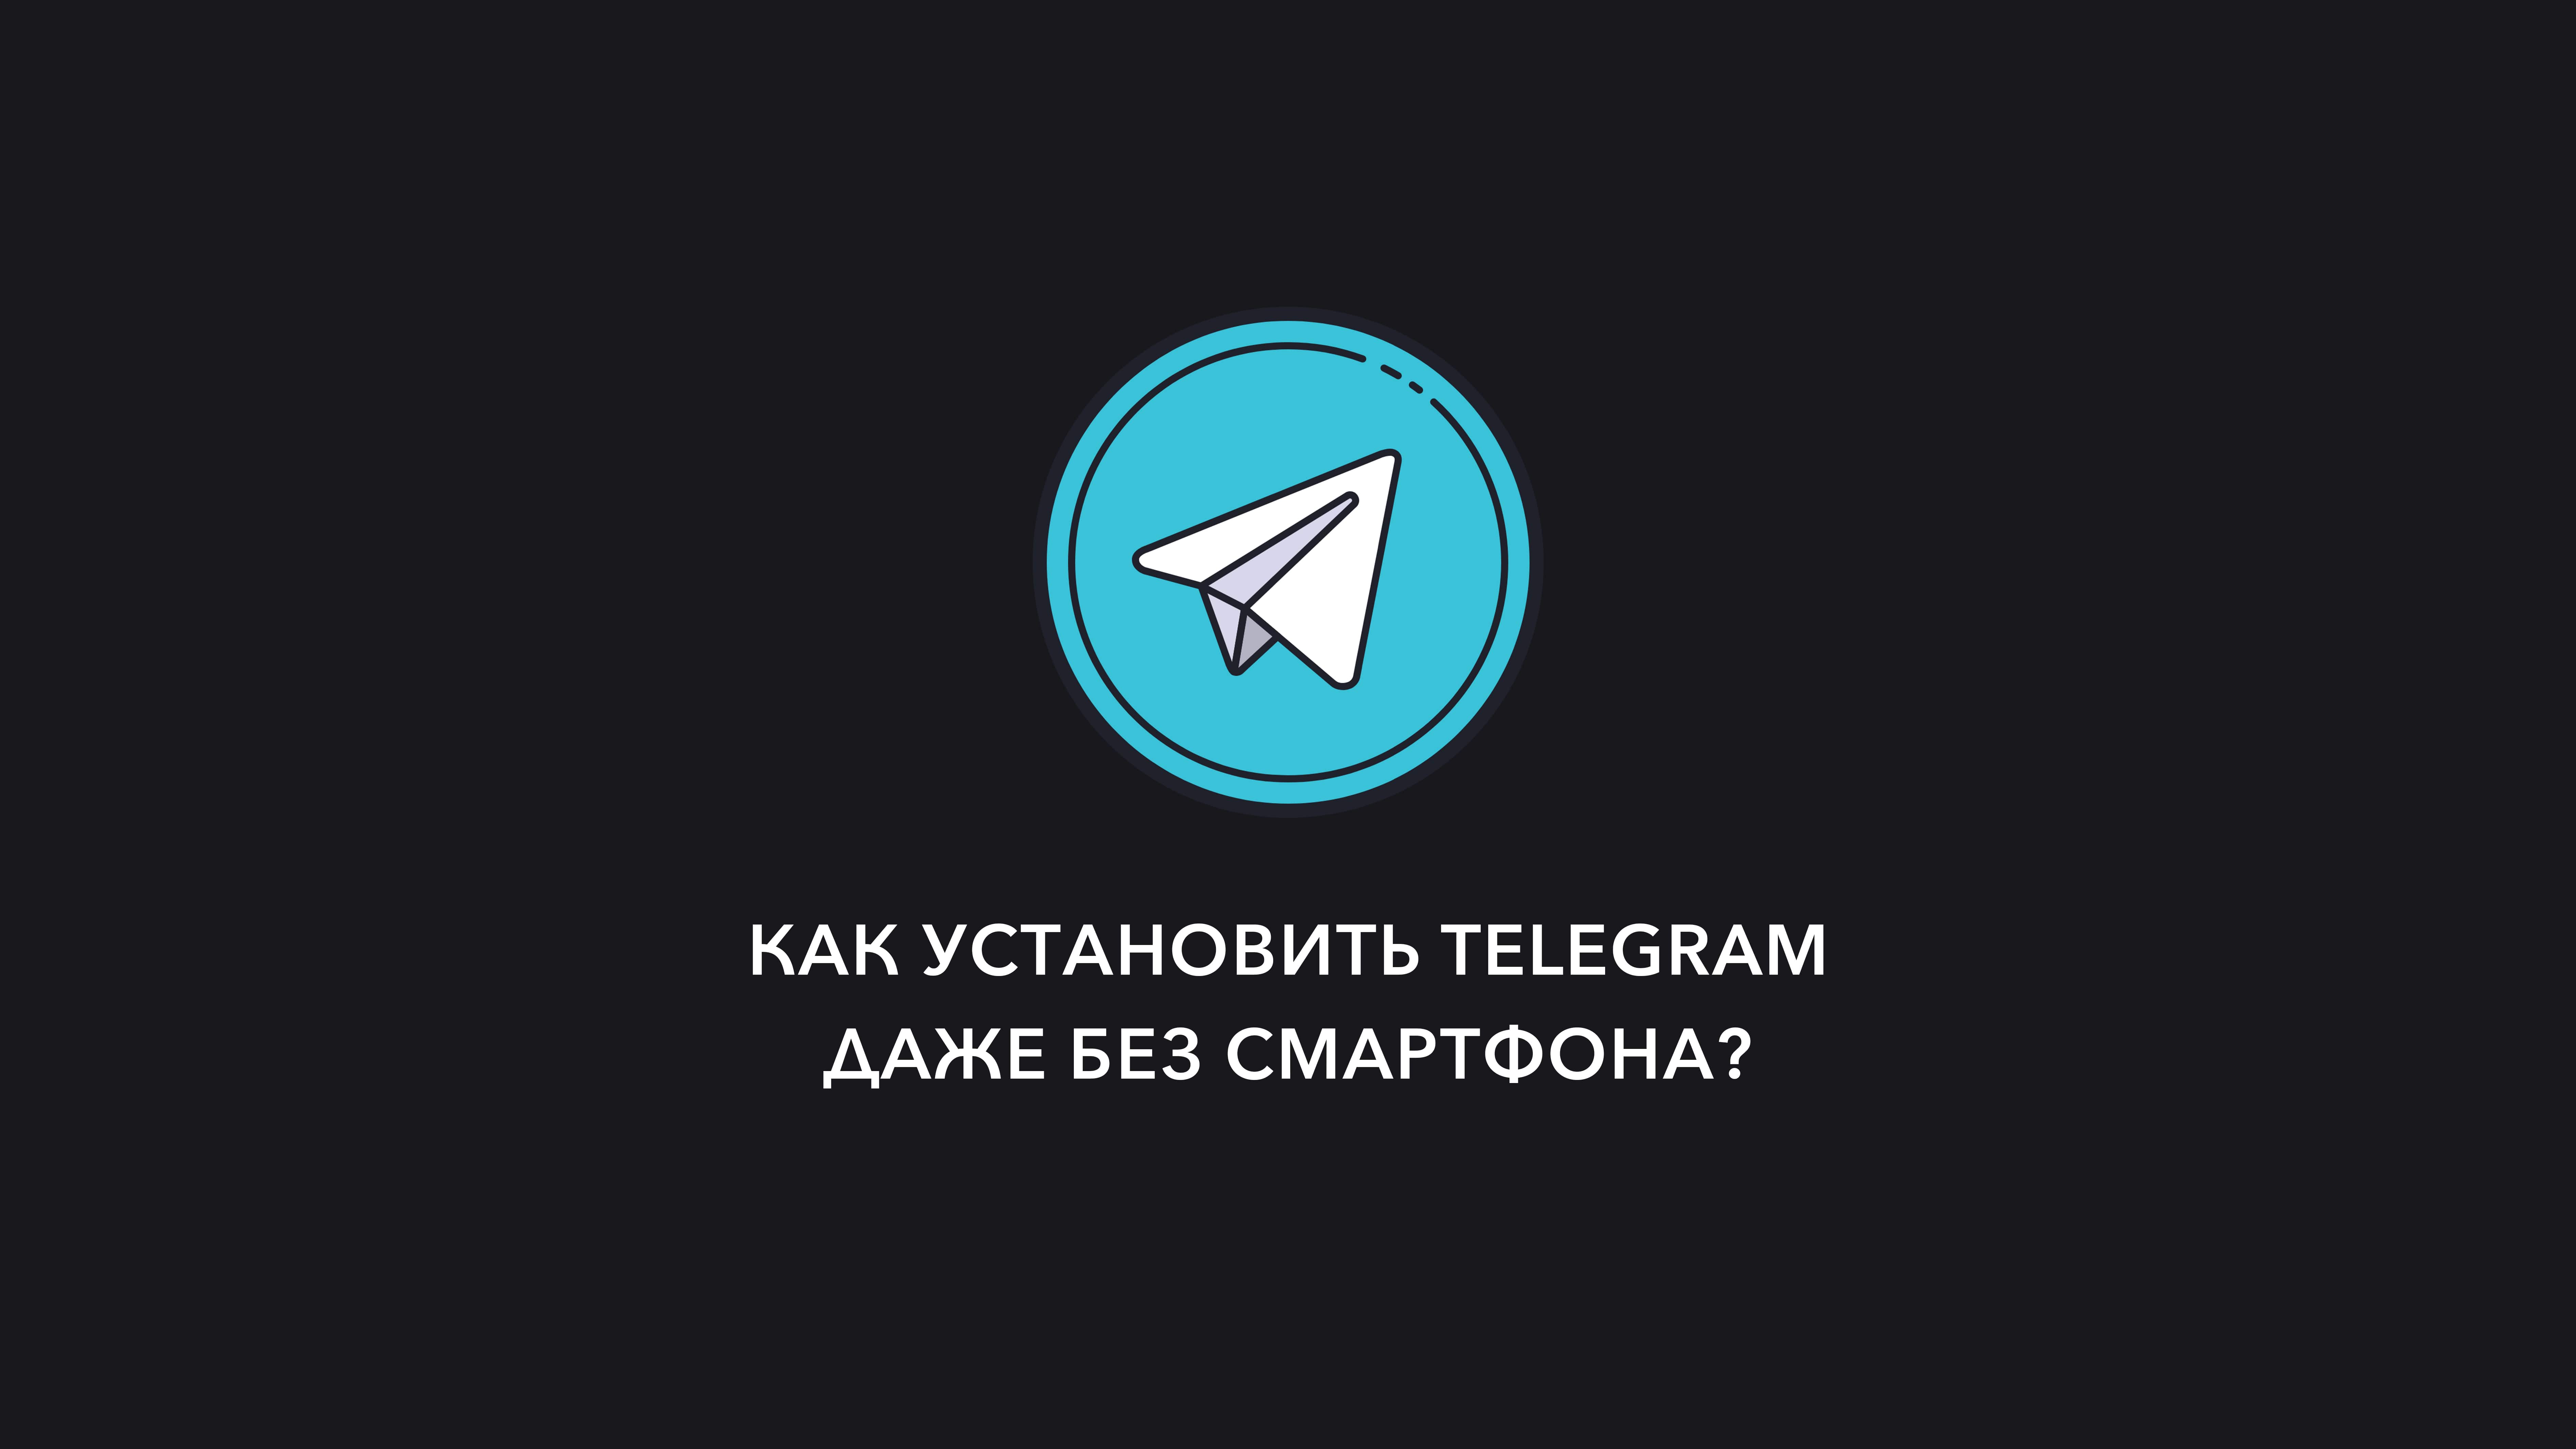 Как настроить телеграмм на русский на андроиде фото 48